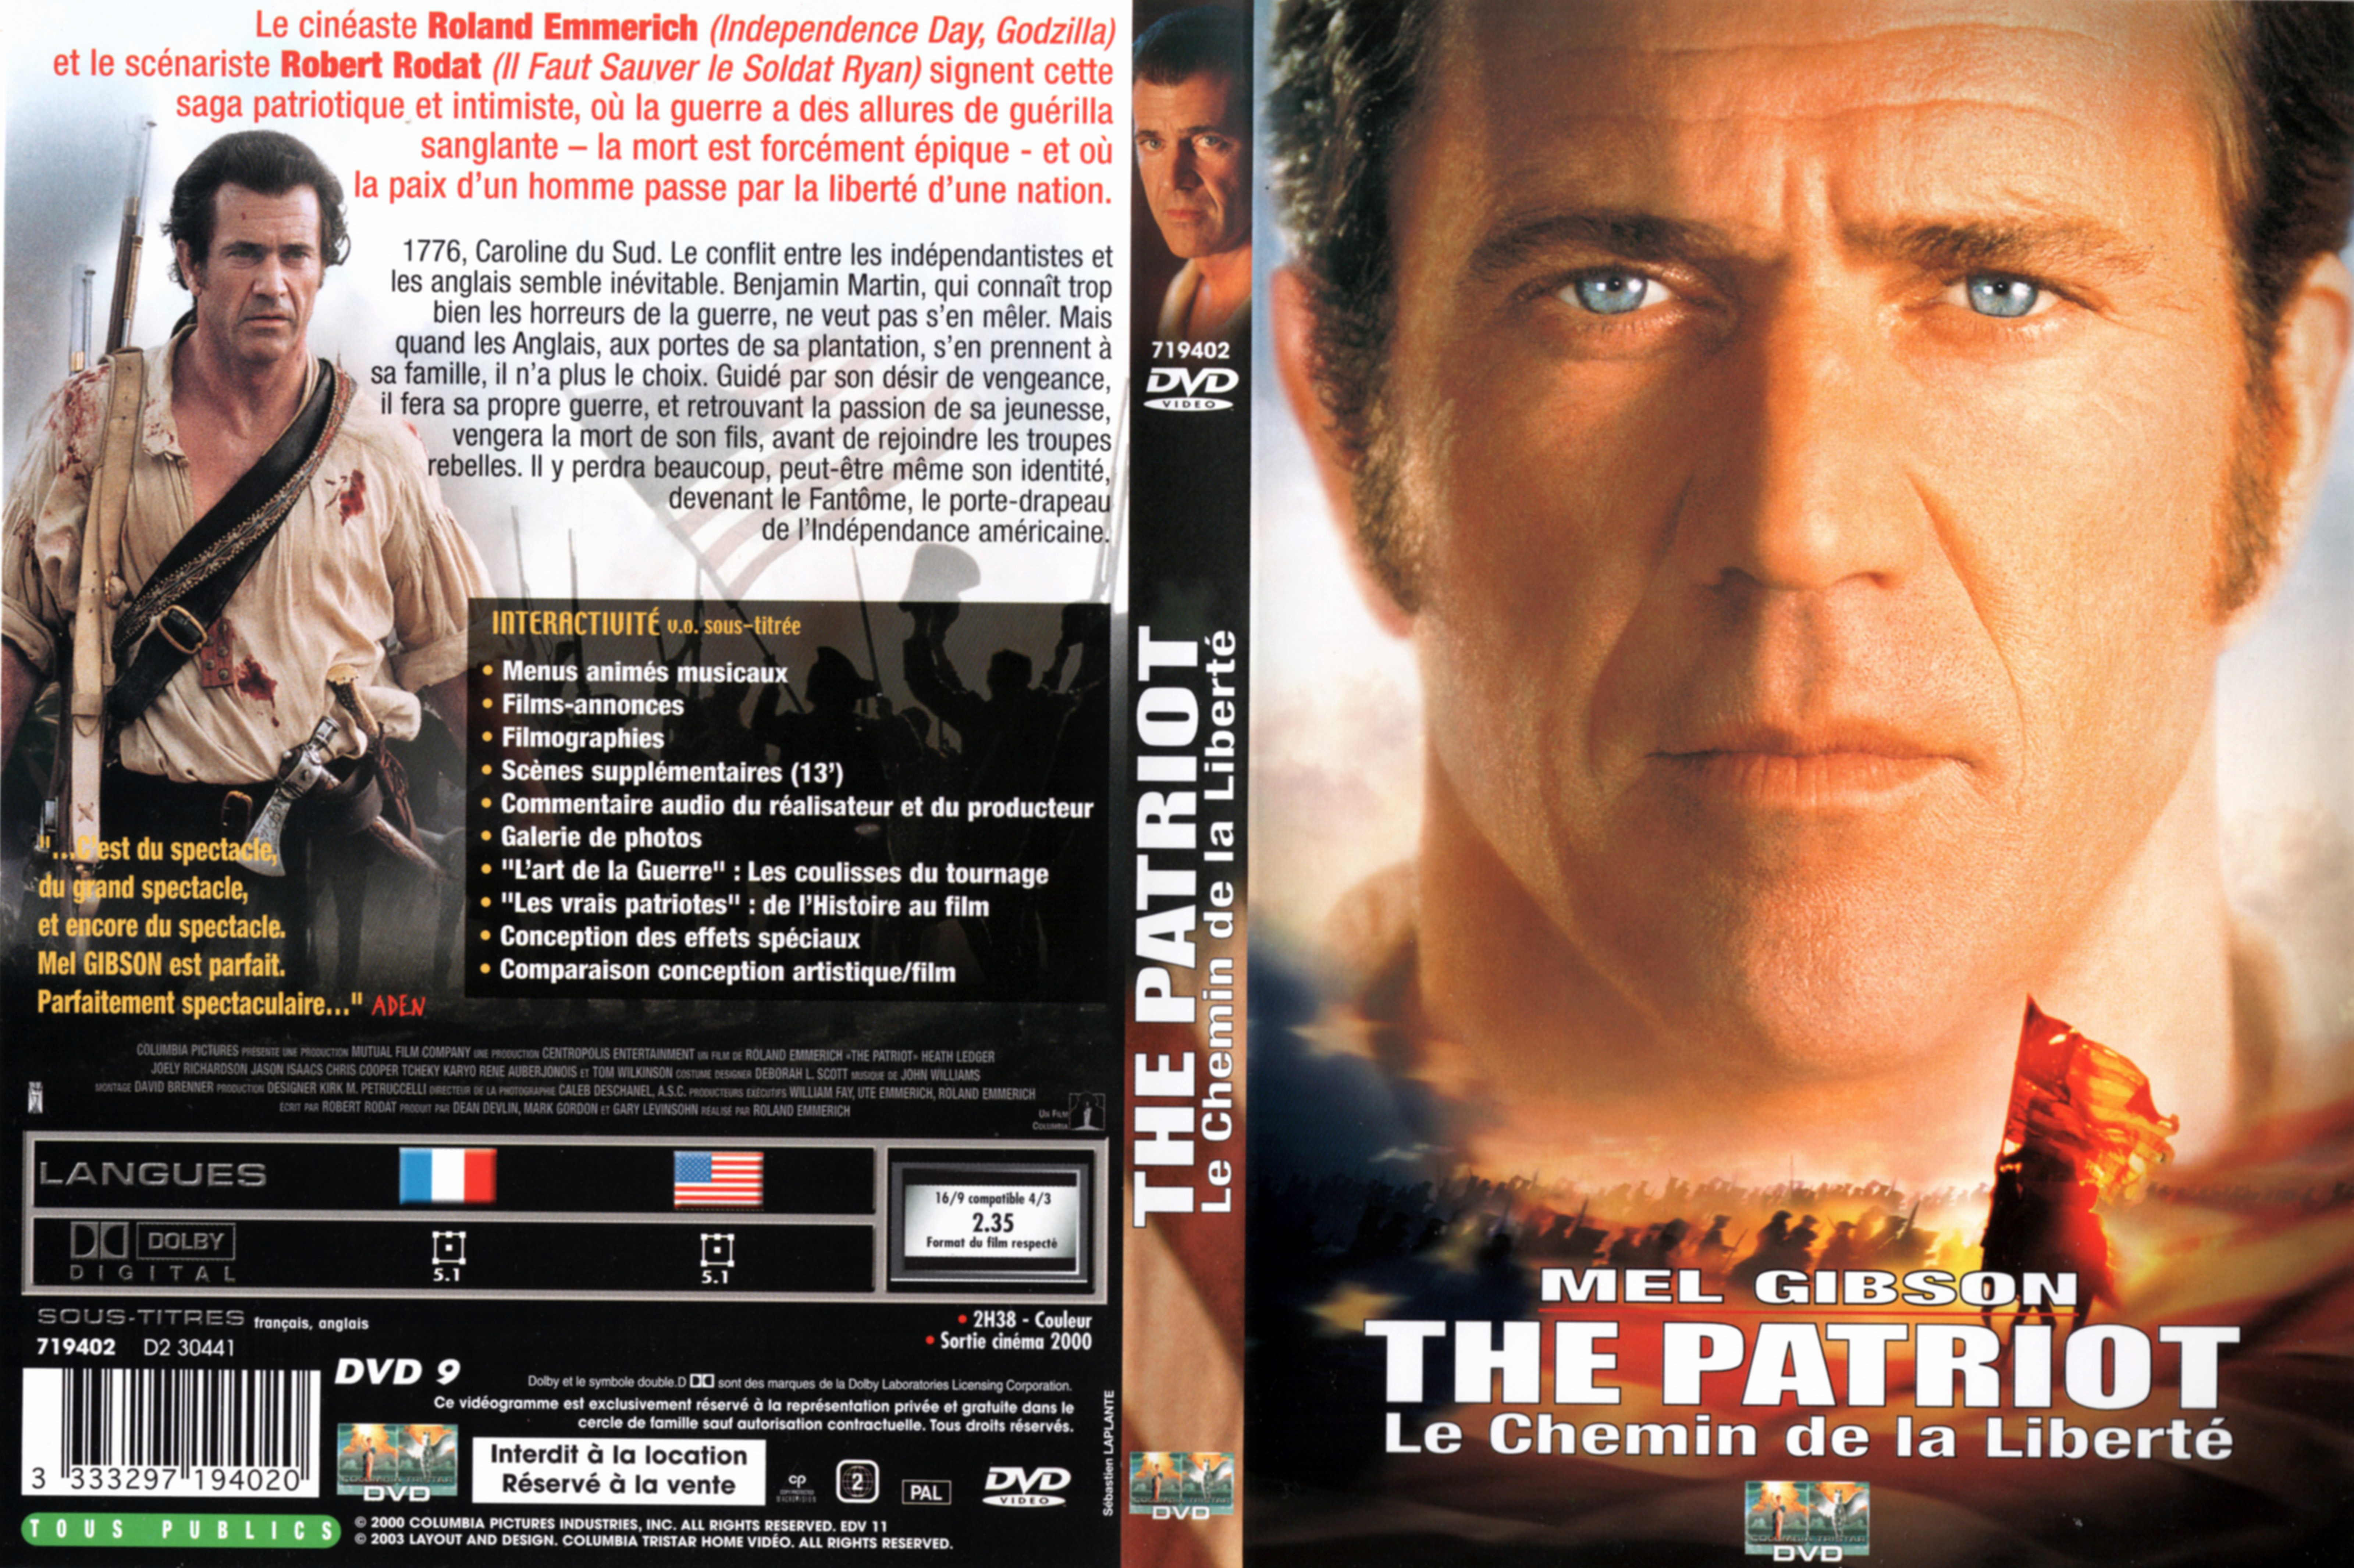 Jaquette DVD The patriot v4